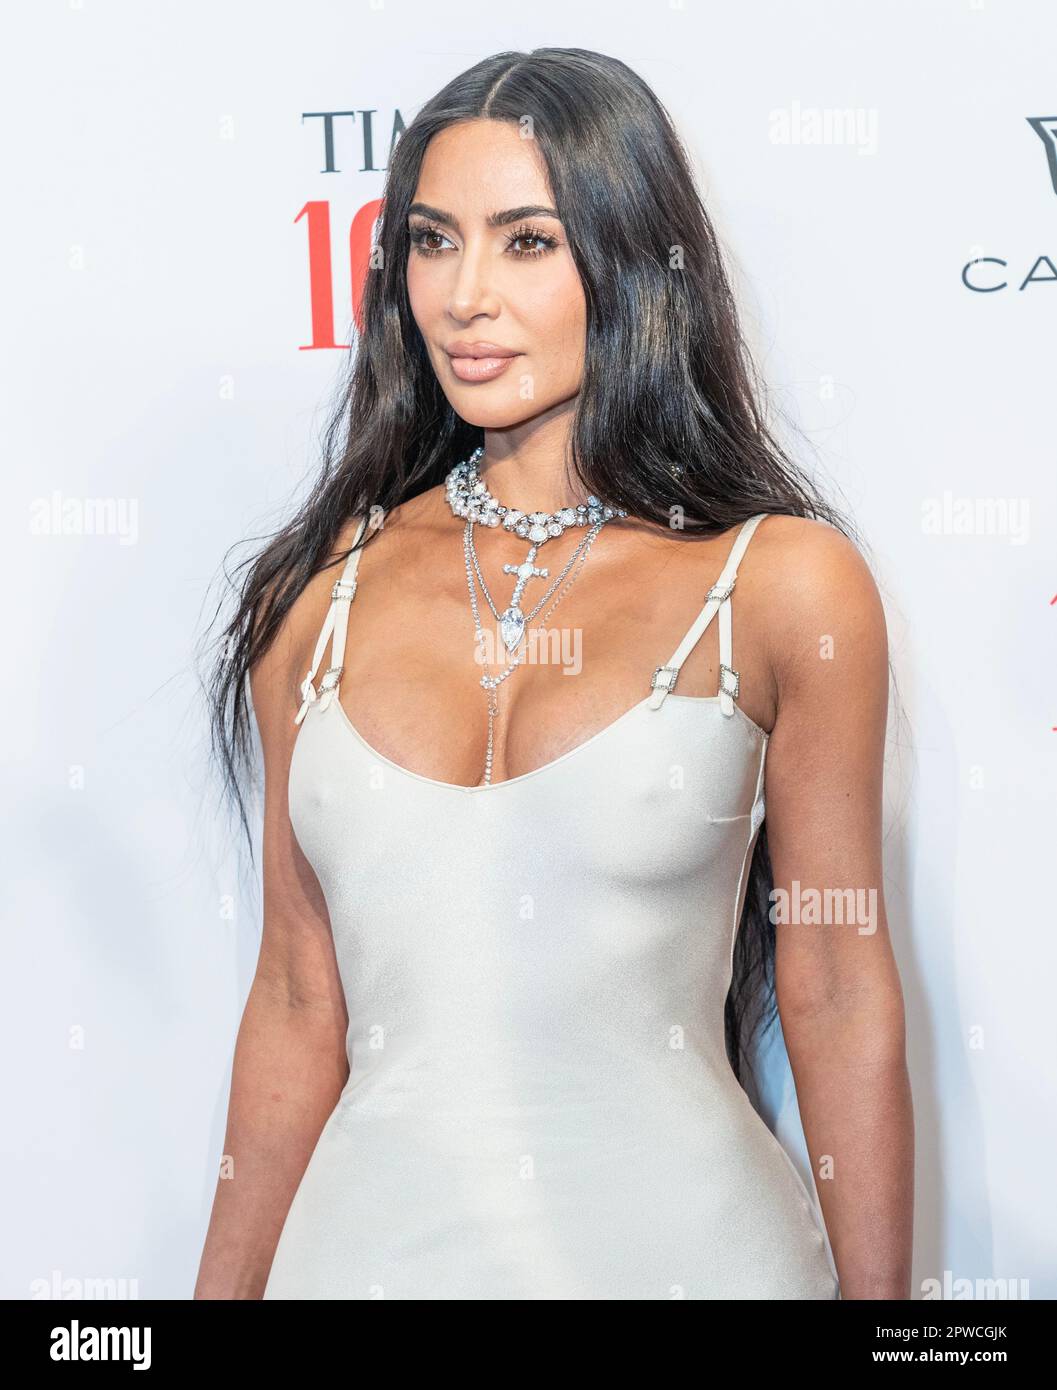 Kim Kardashian wore John Galliano silk slip dress @ 2023 Time 100 Gala